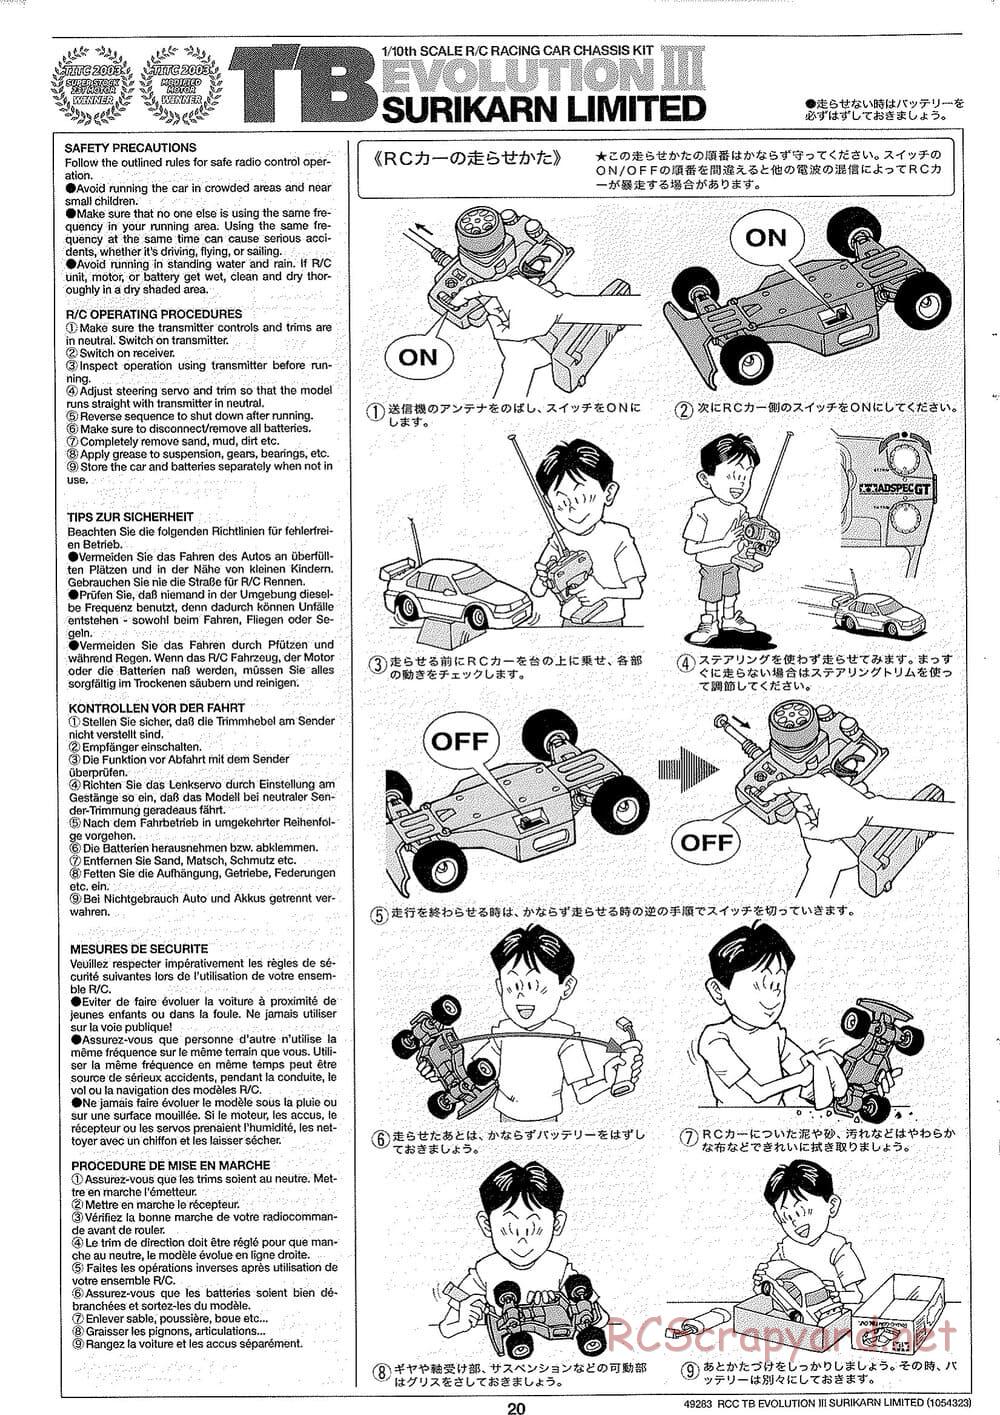 Tamiya - TB Evolution III Surikarn Limited Chassis - Manual - Page 20